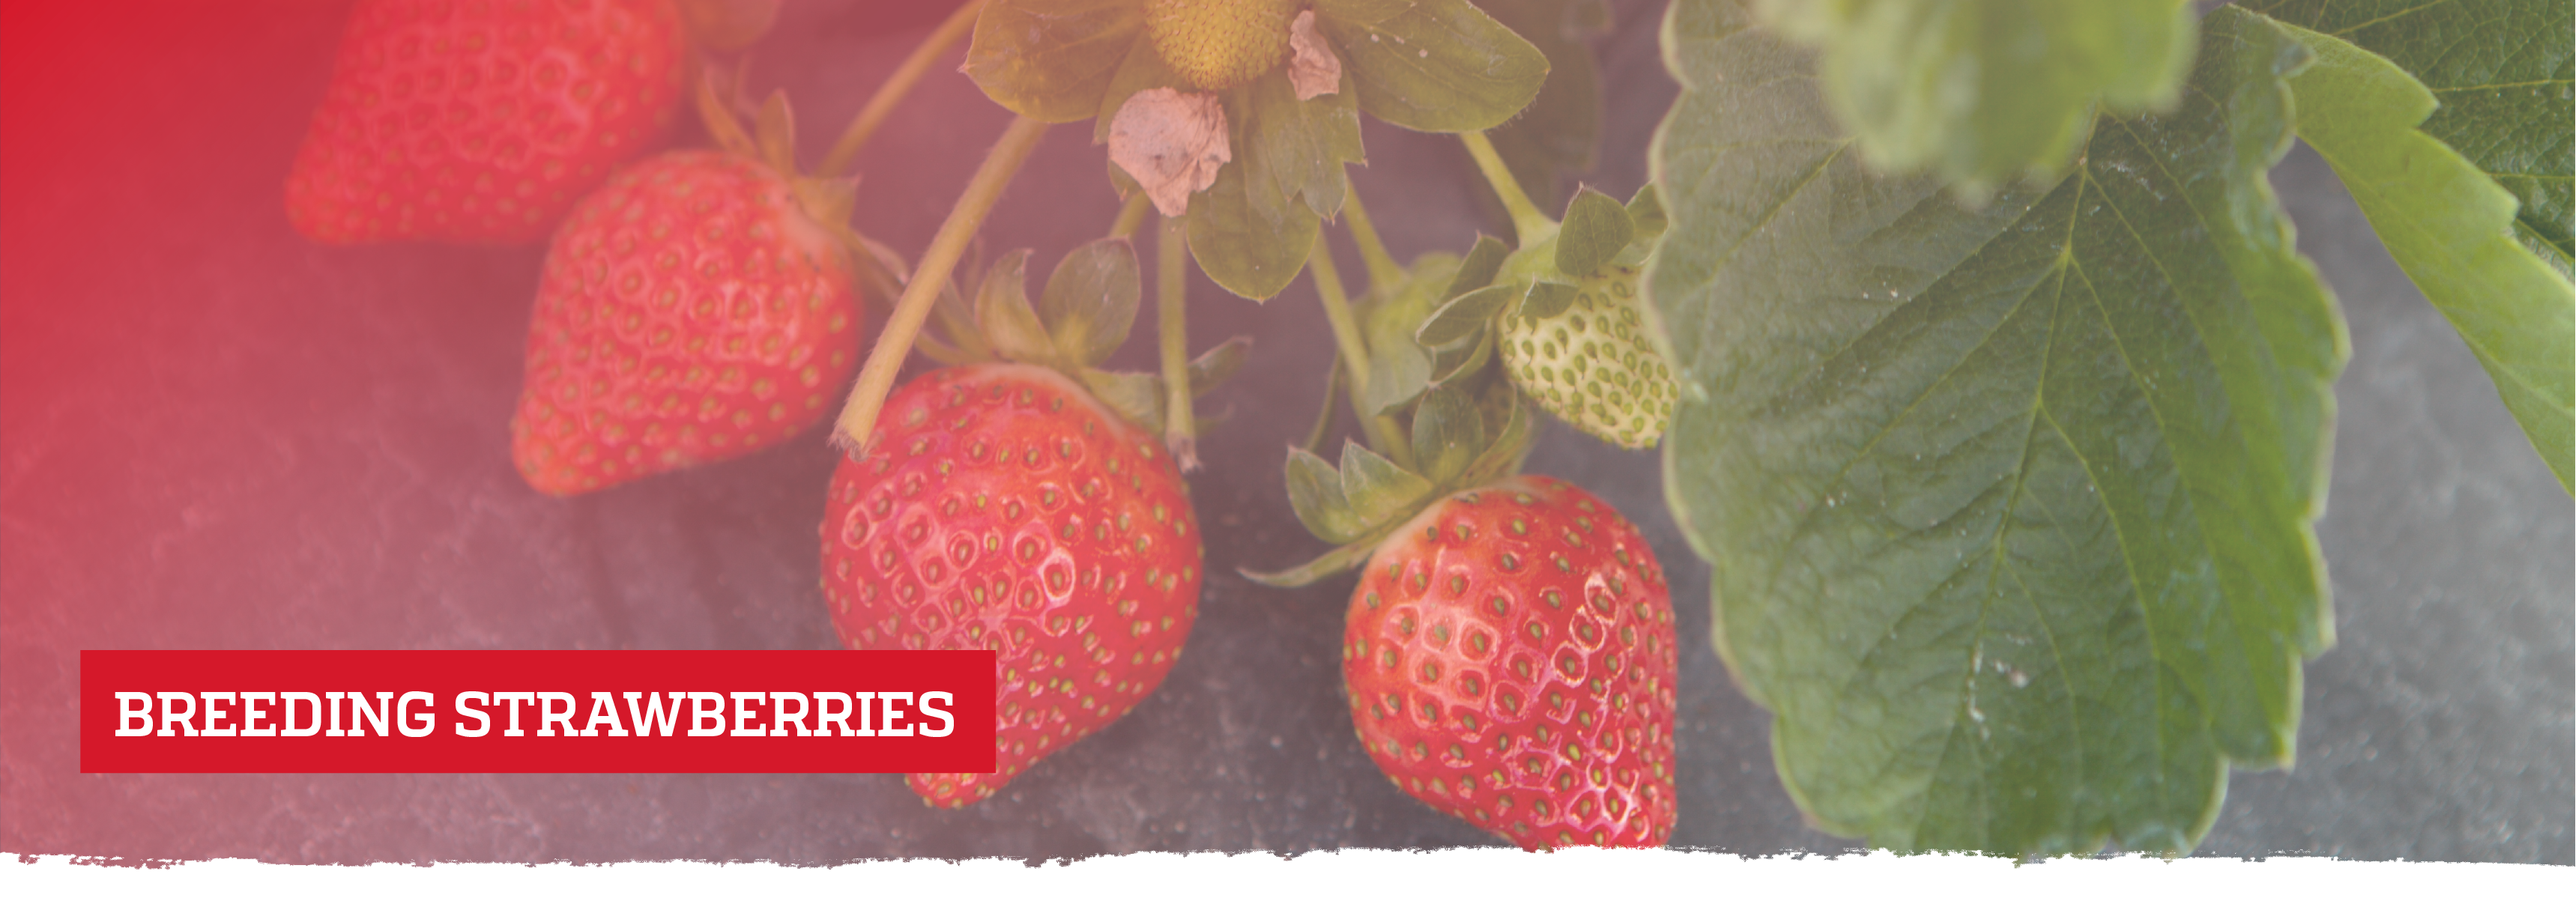 Breeding strawberries